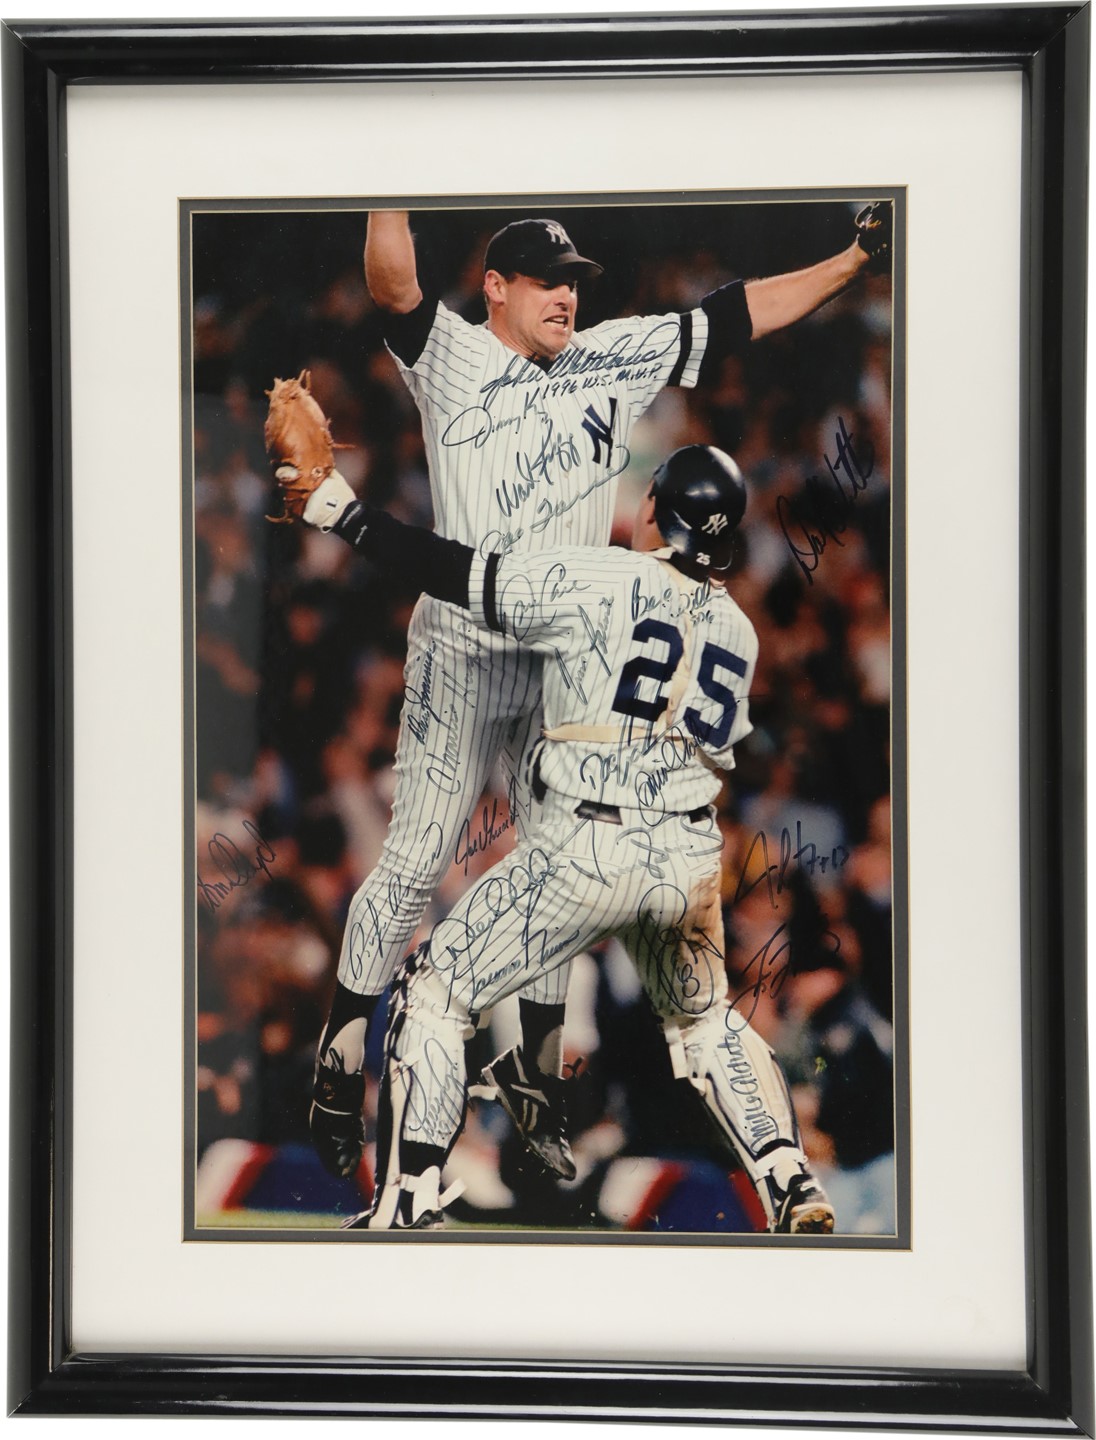 - 1996 World Champion New York Yankees Team Signed Photo